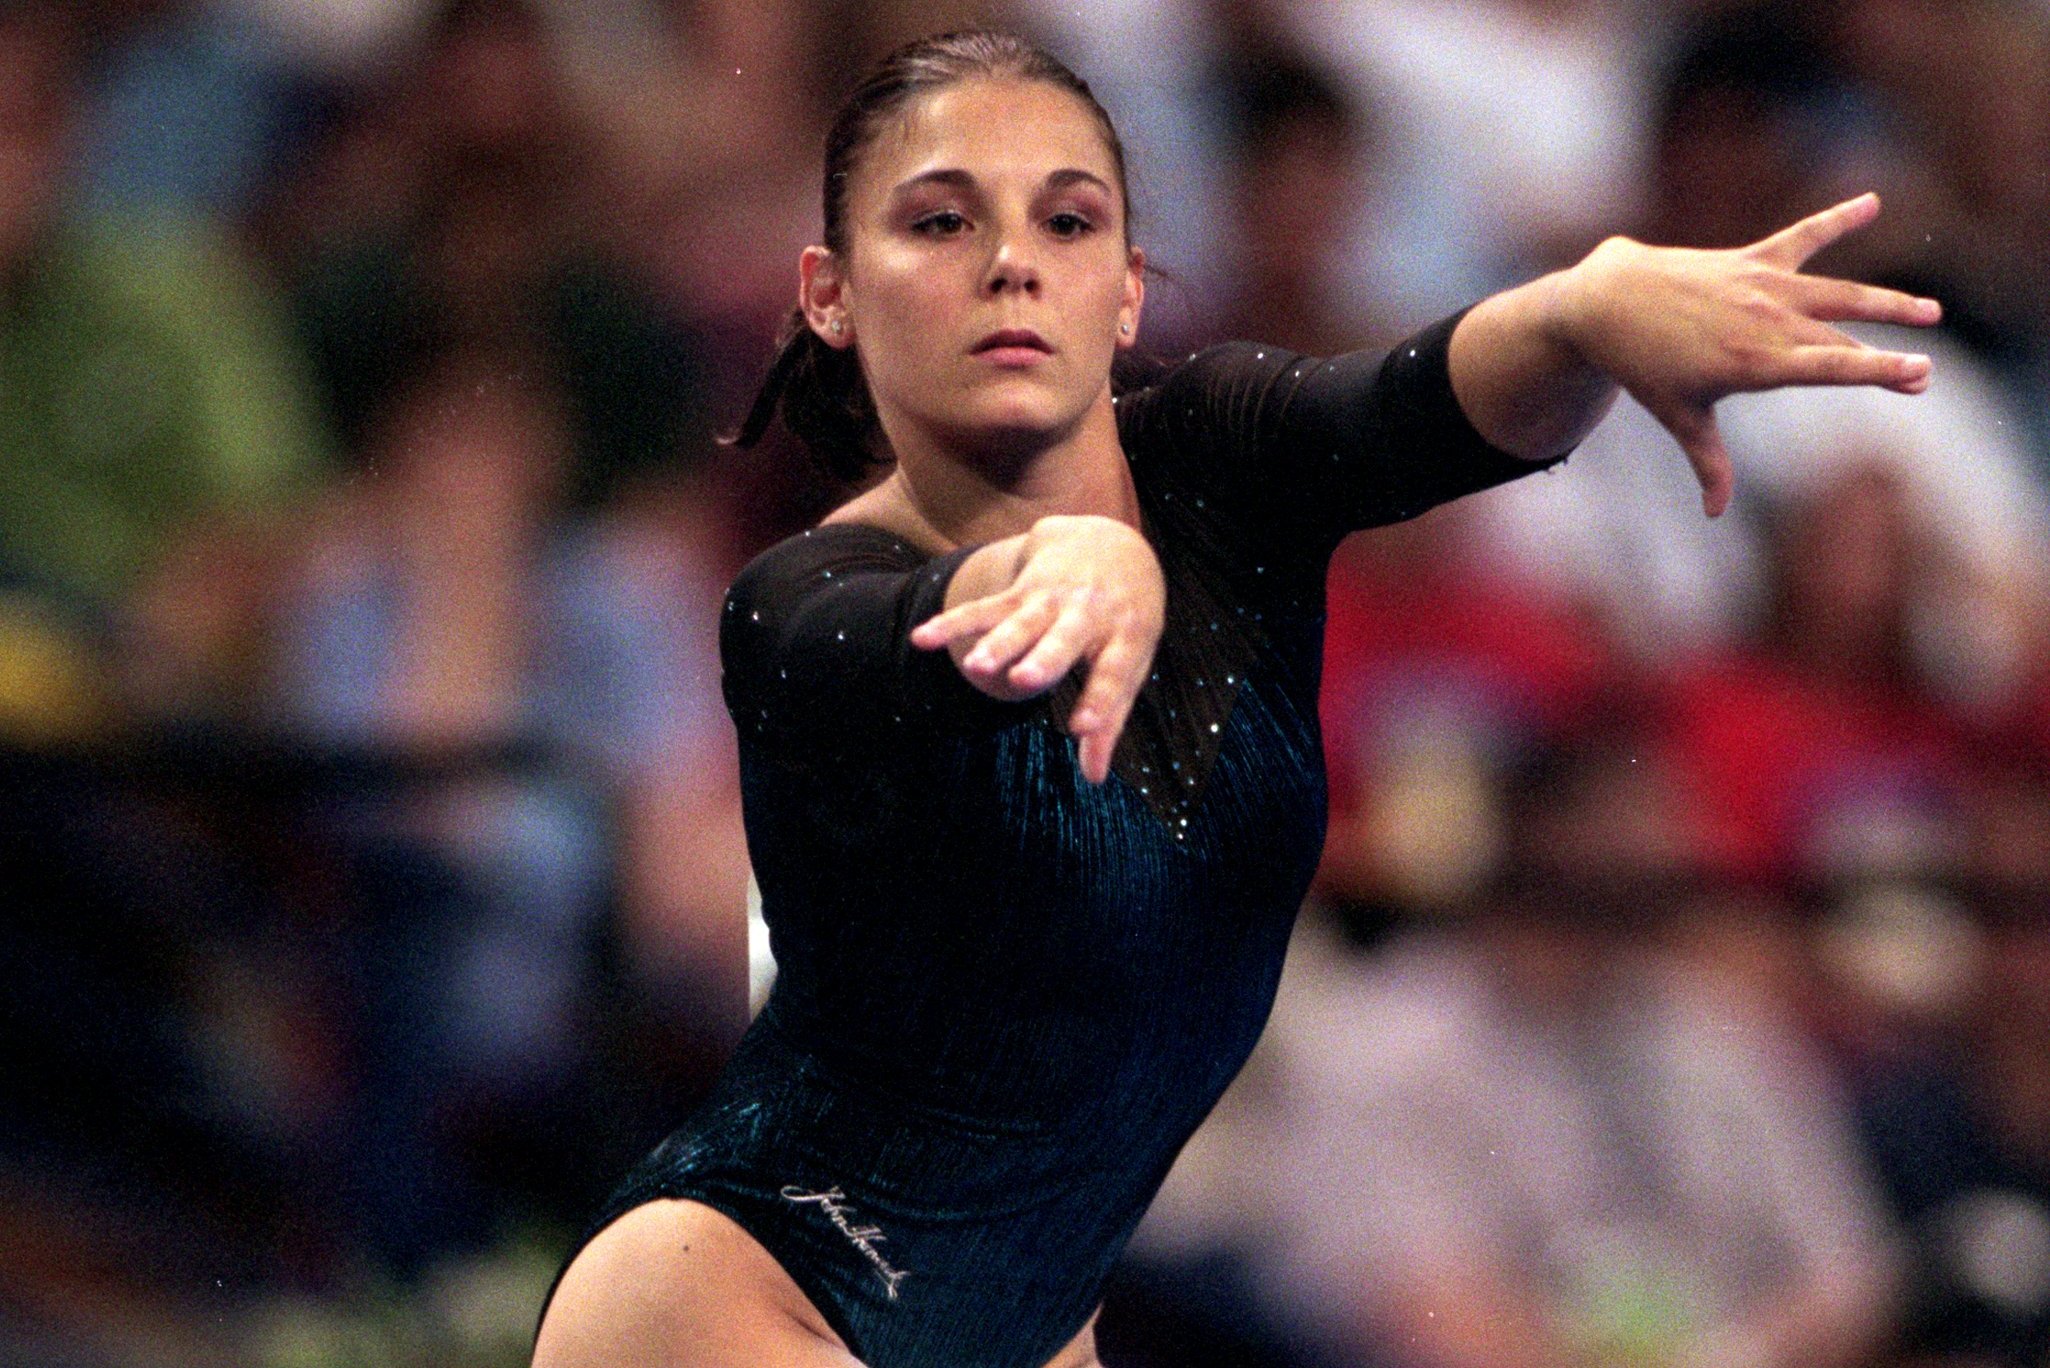 He's guilty as sin: Former gymnast Jessica Howard slams ex-USA